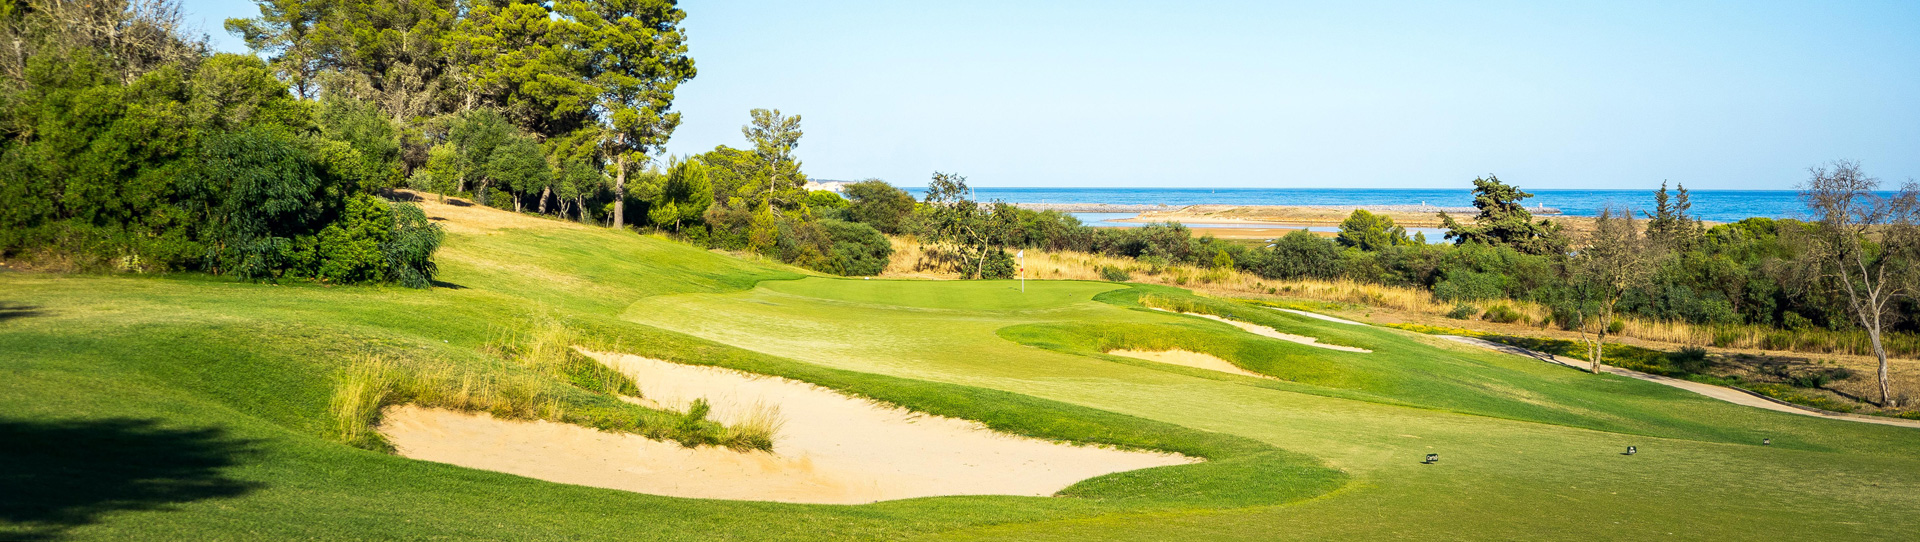 Portugal golf holidays - Palmares Quad Experience - Photo 1